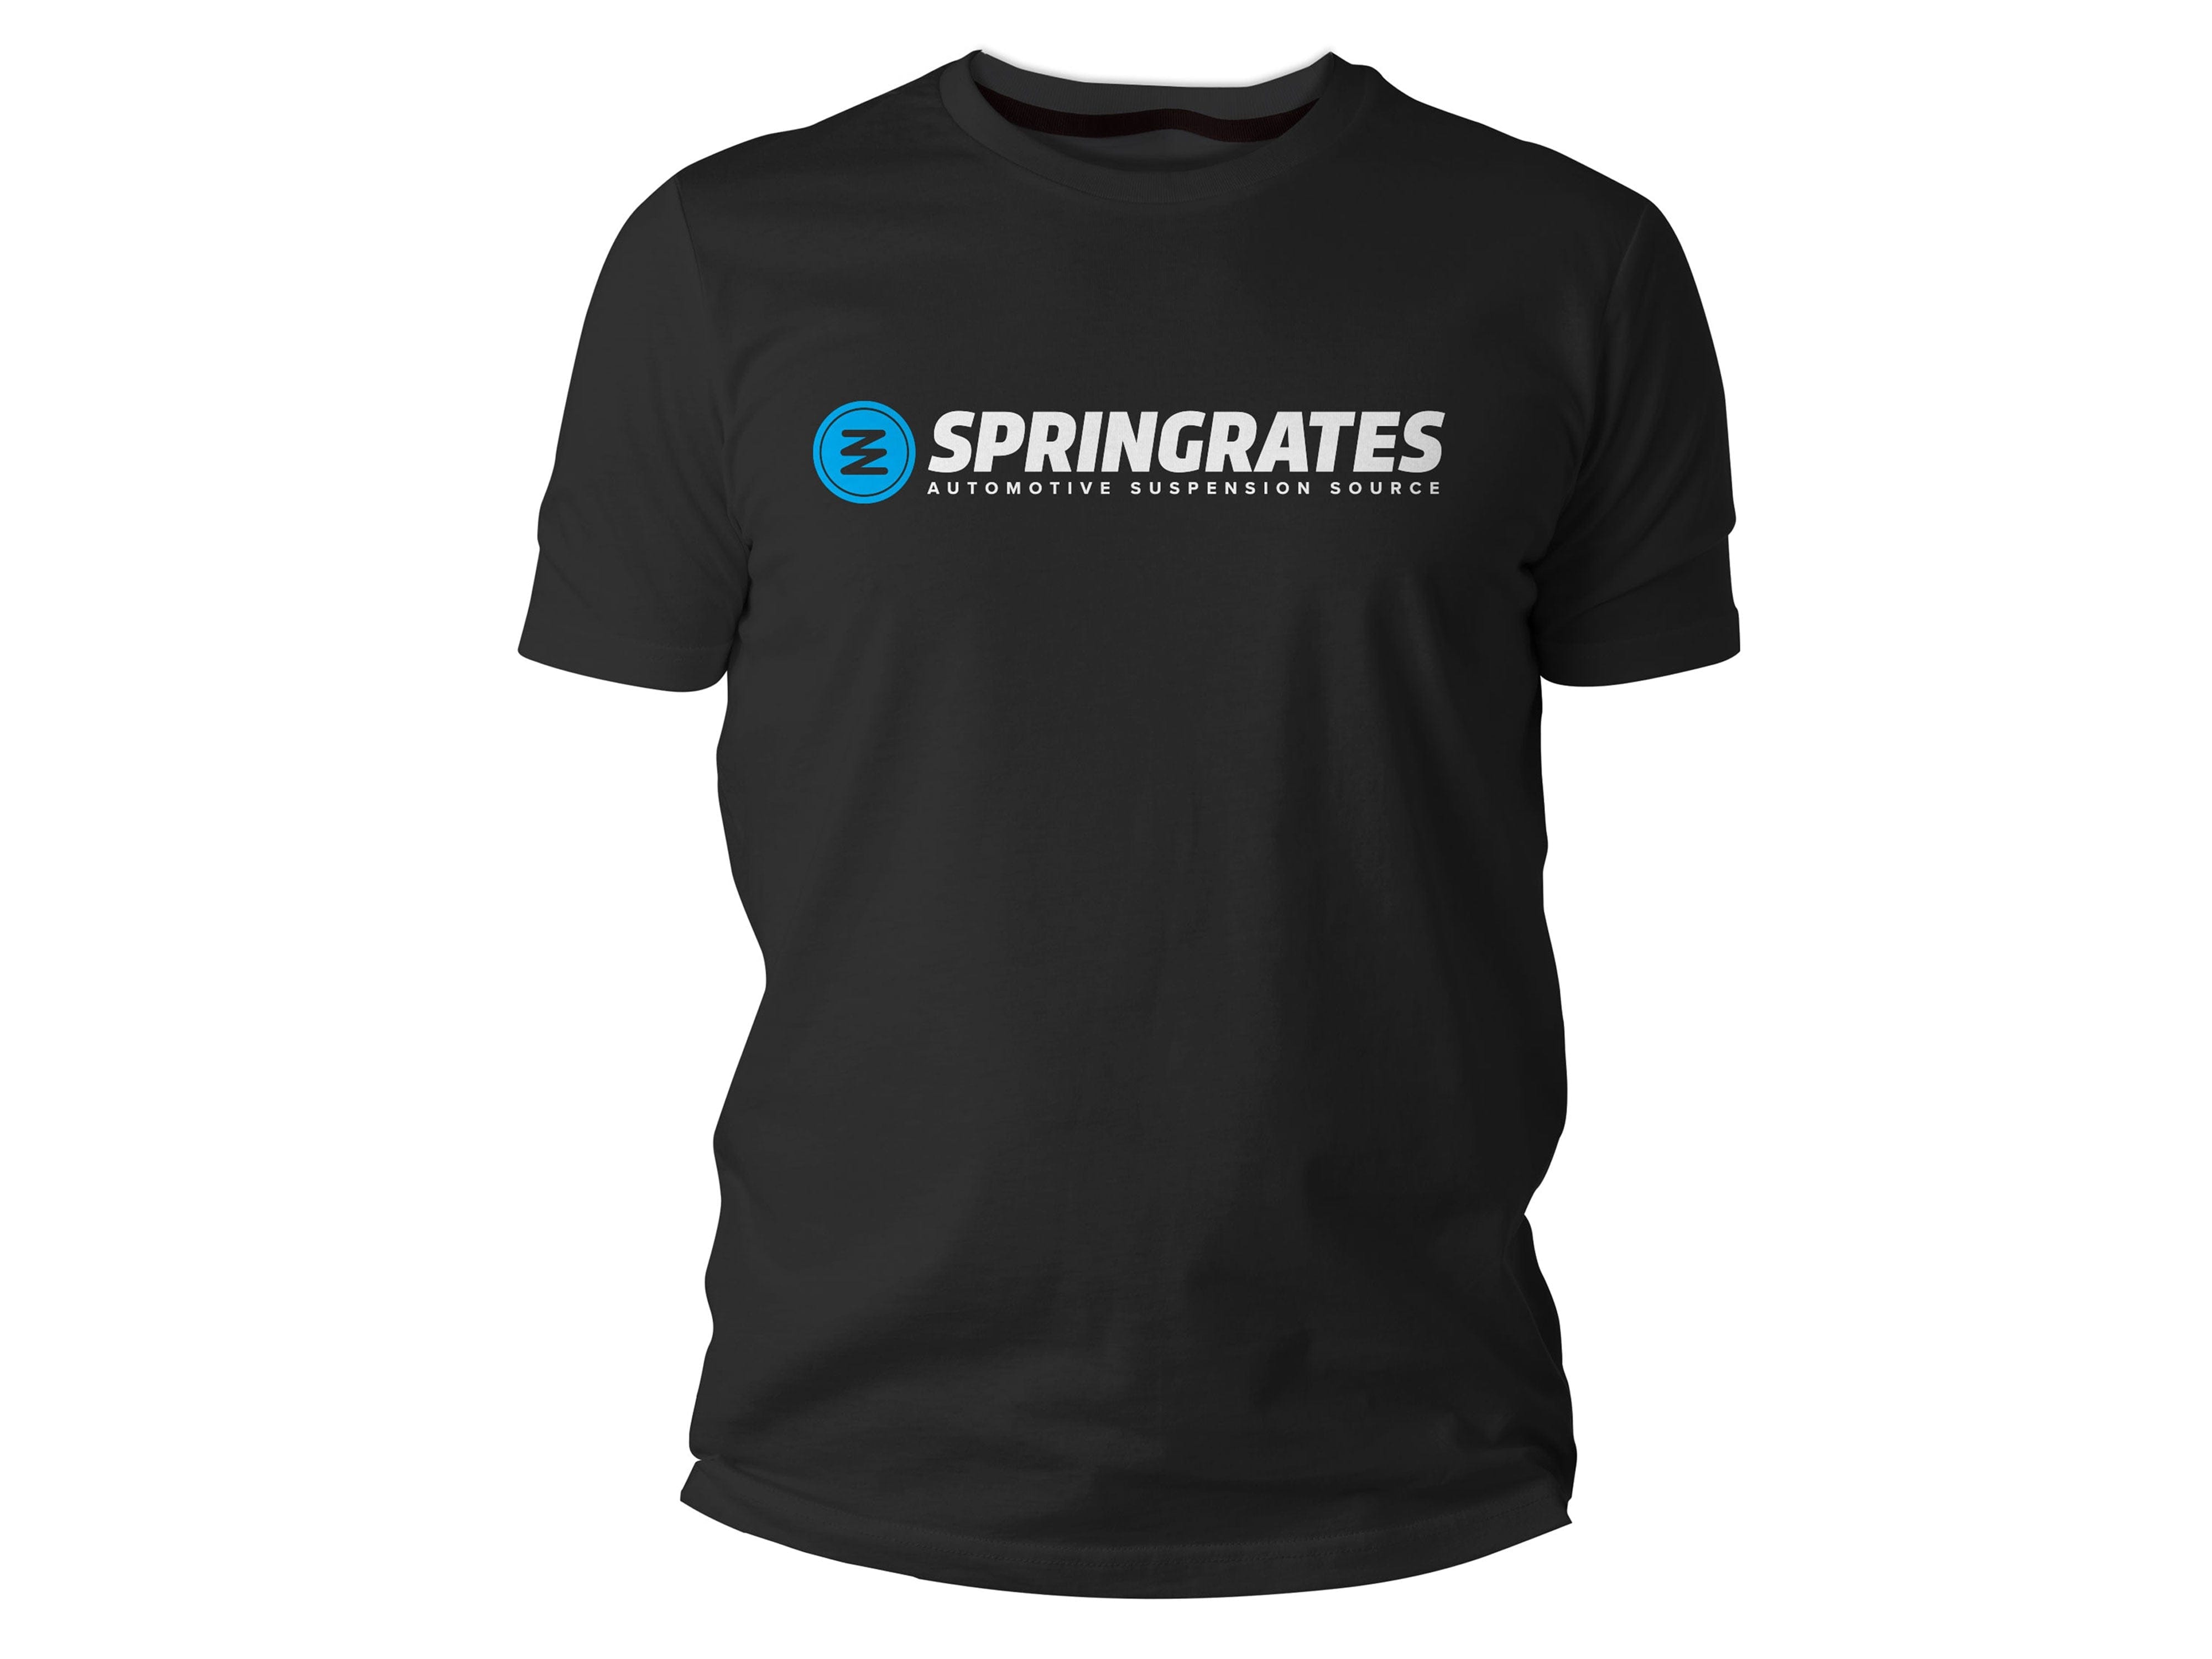 Springrates 'Logo' Shirt - Black